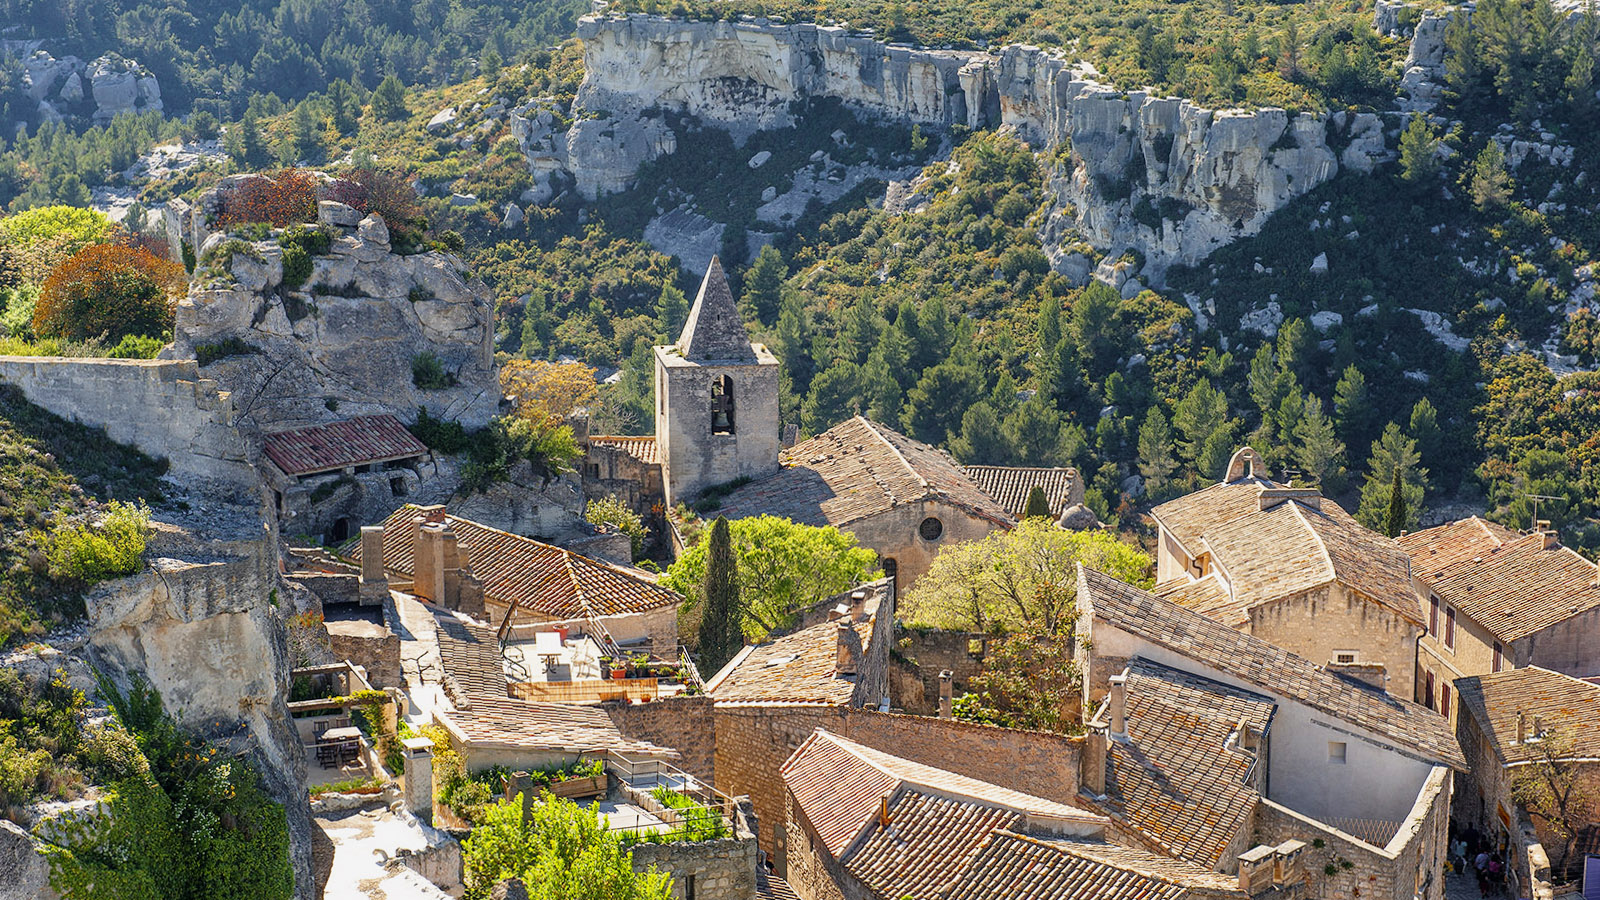 Les Baux-de-Provence gehört zu den schönsten Dörfern Frankreichs. Foto: Hilke Maunder